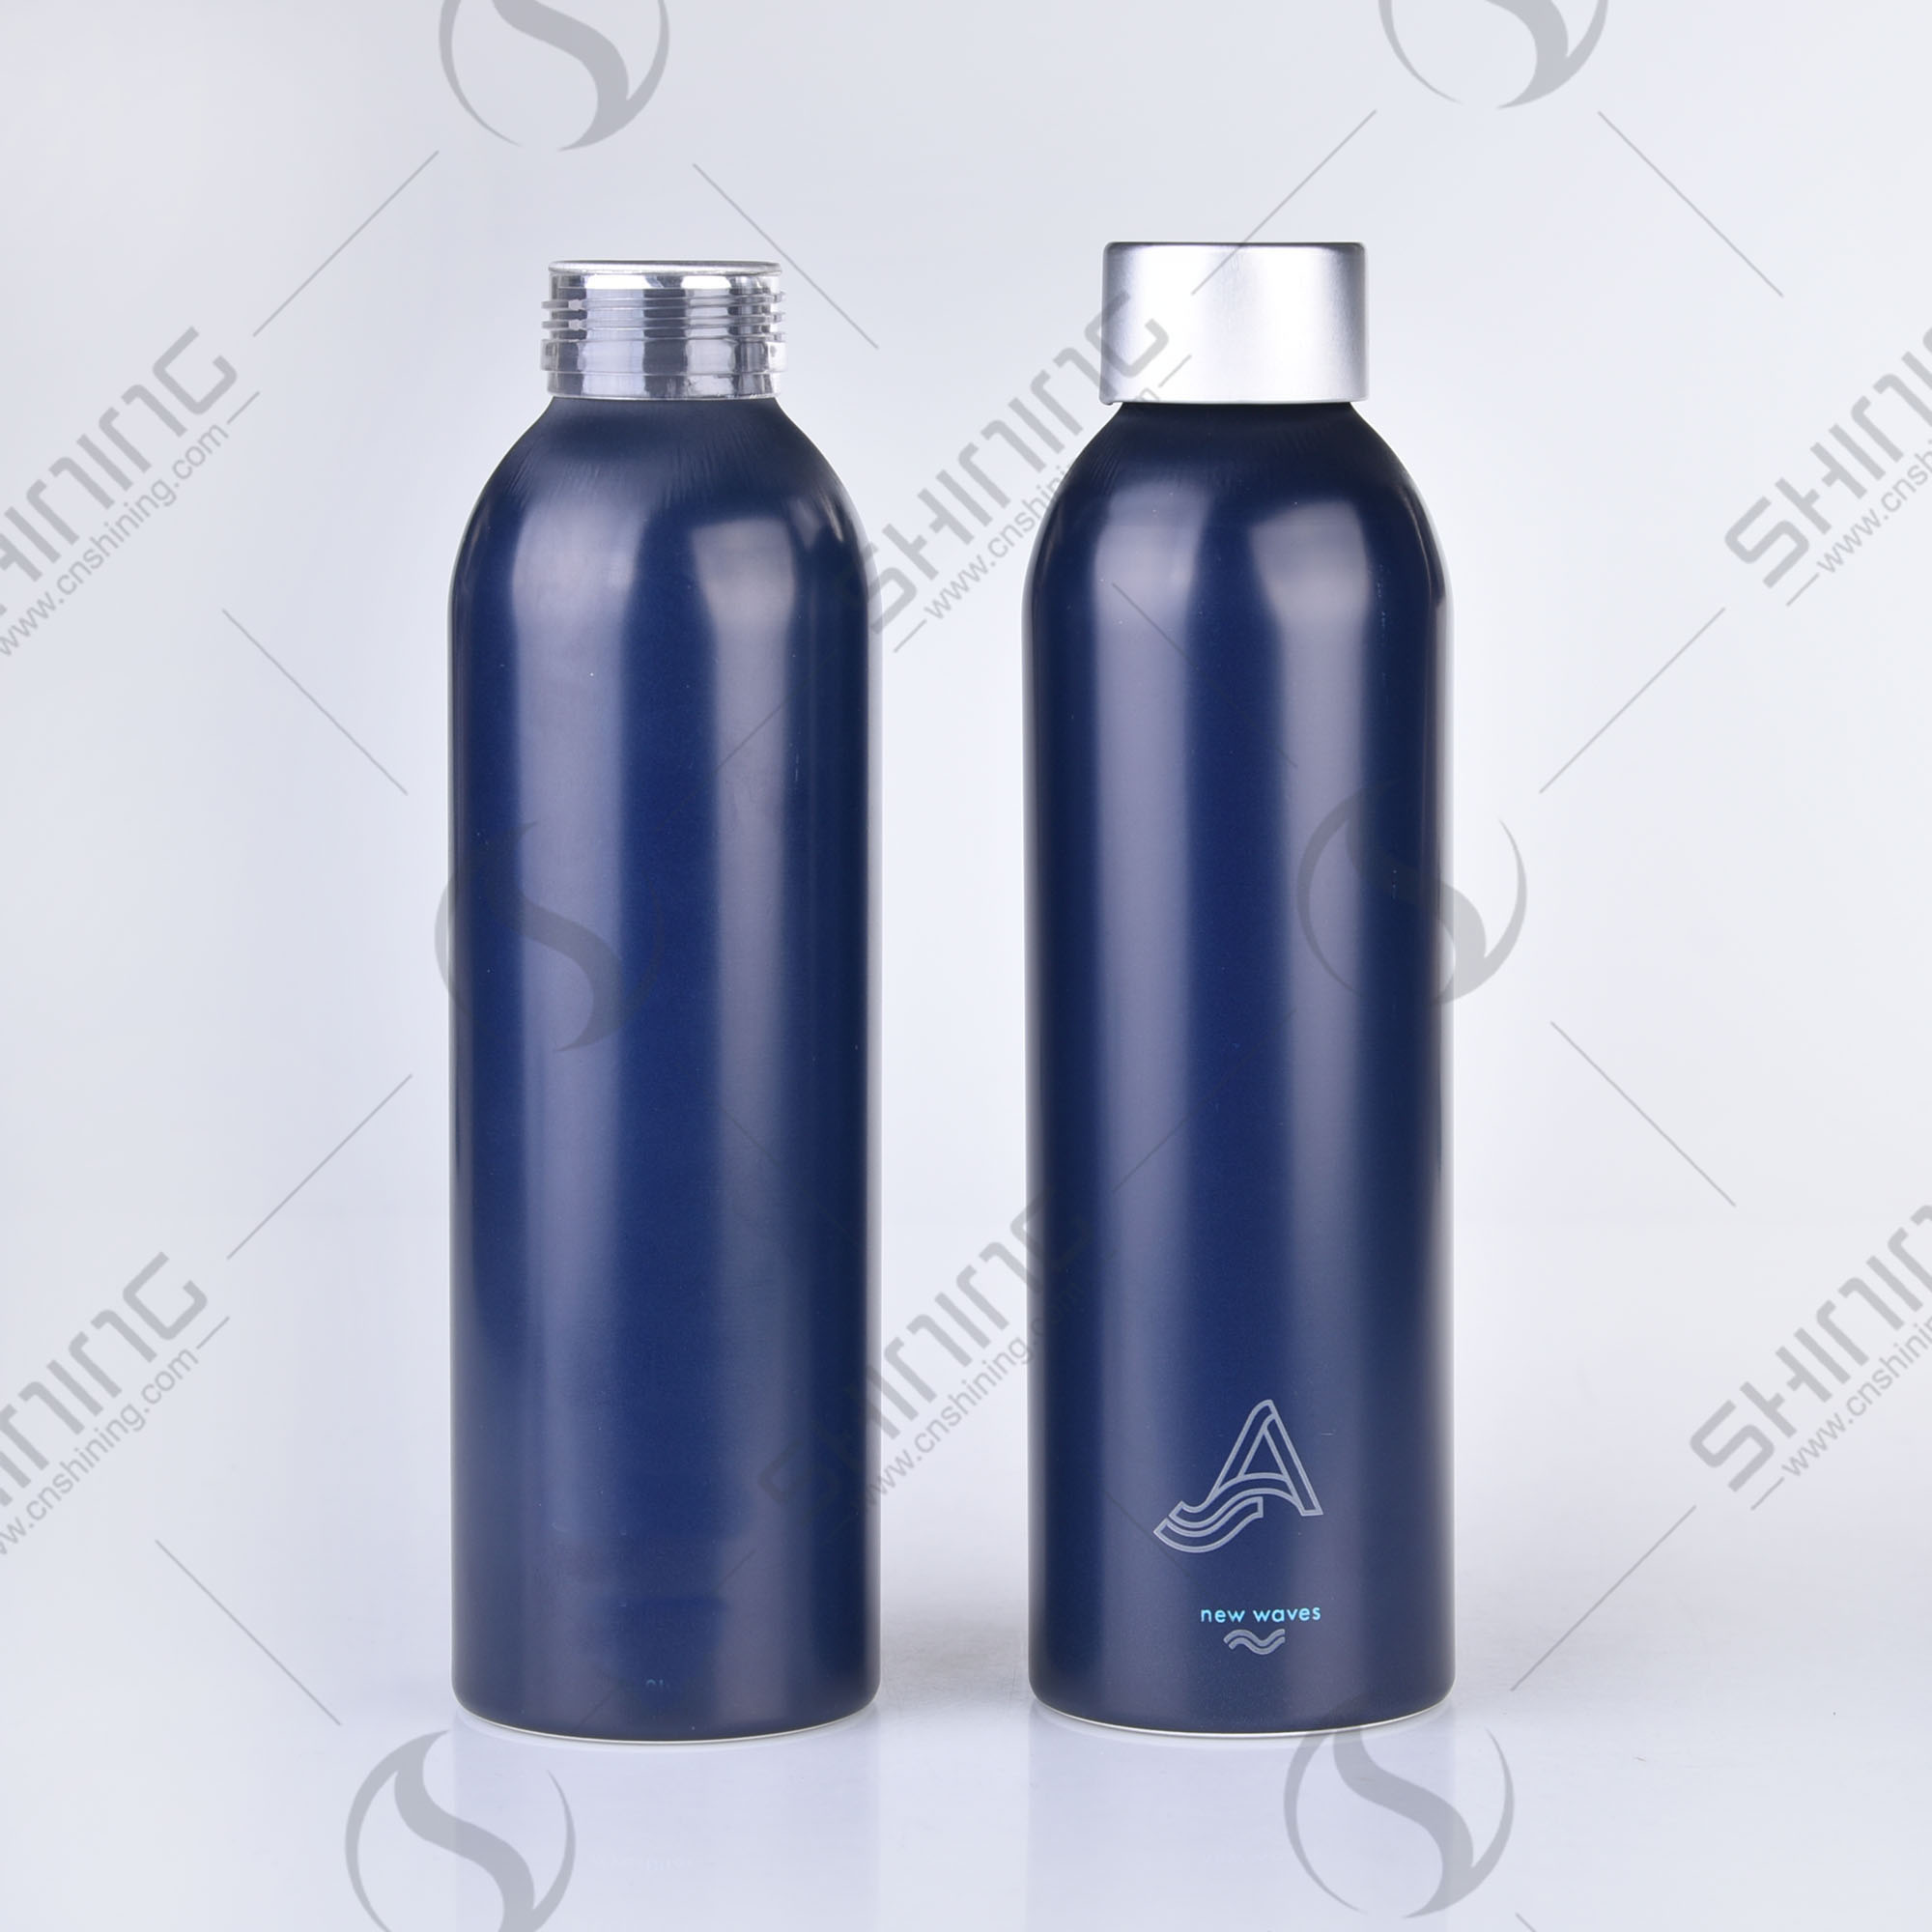 16 oz Aluminum juice bottle